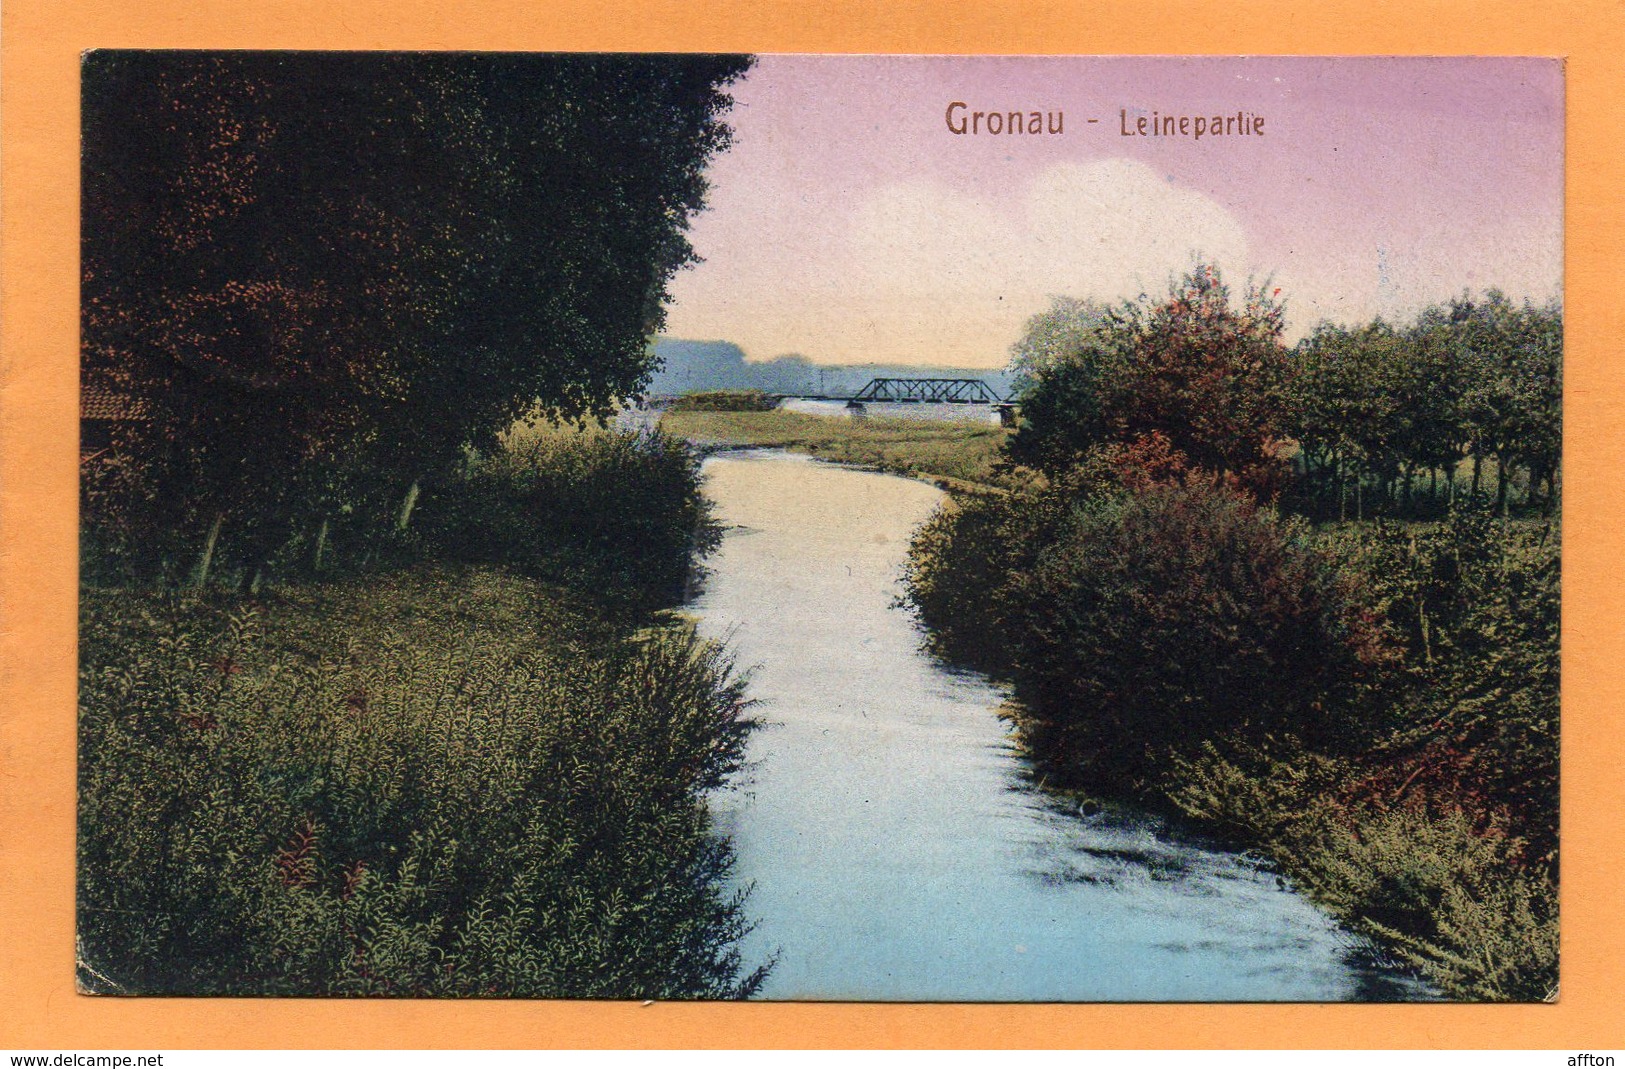 Groanu I W Germany 1919 Postcard Mailed - Gronau